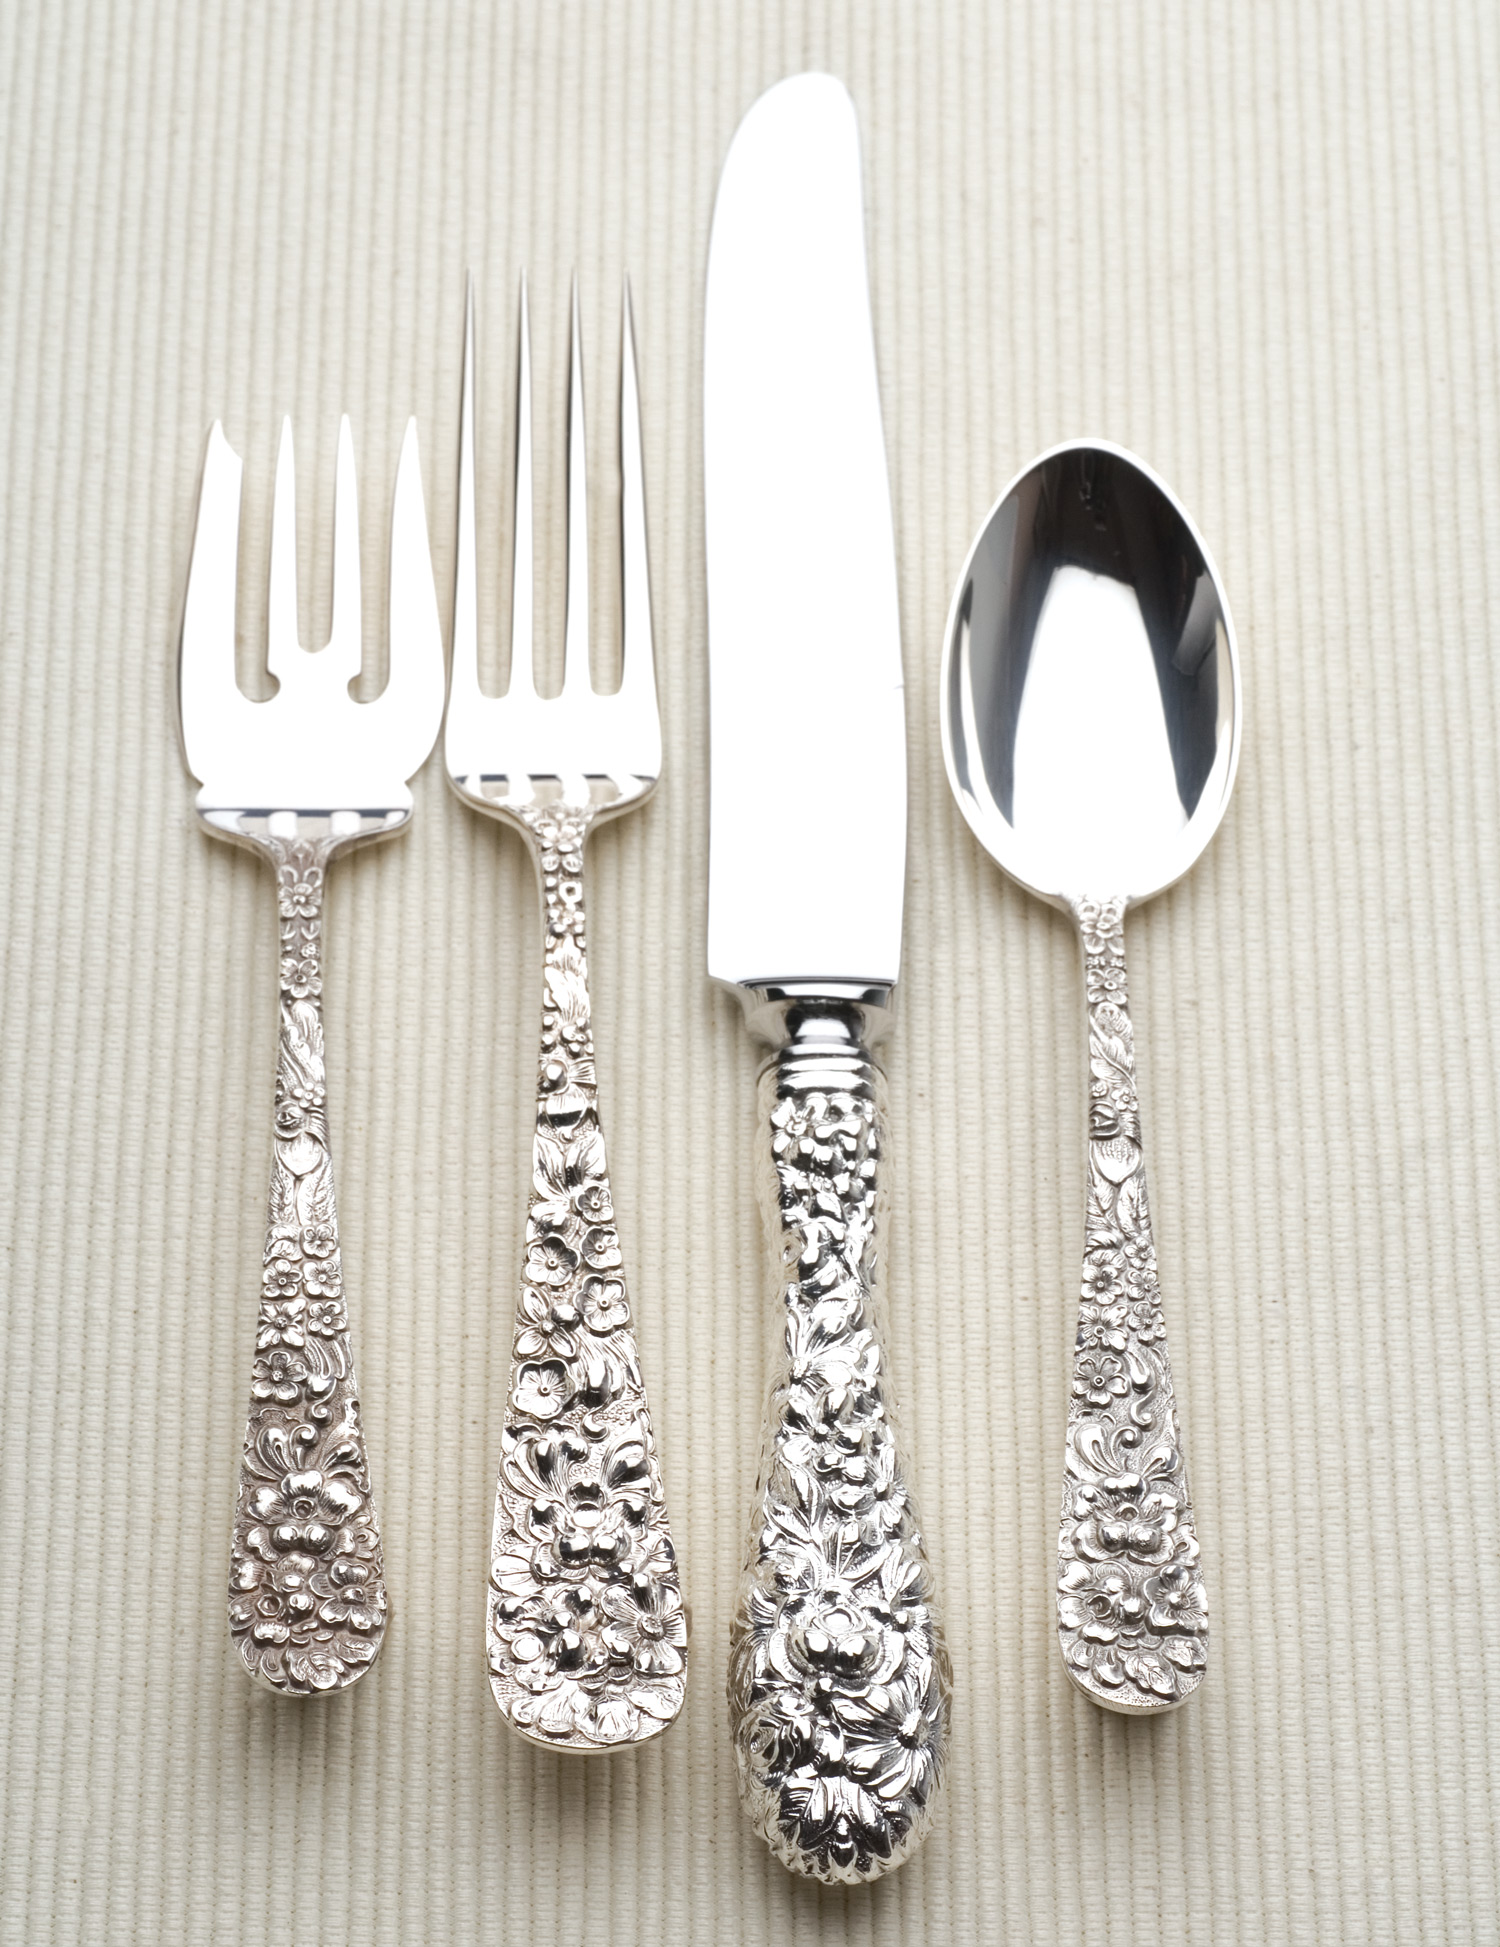 Stieff Rose Pickle Fork Details about   Sterling Silver Flatware 